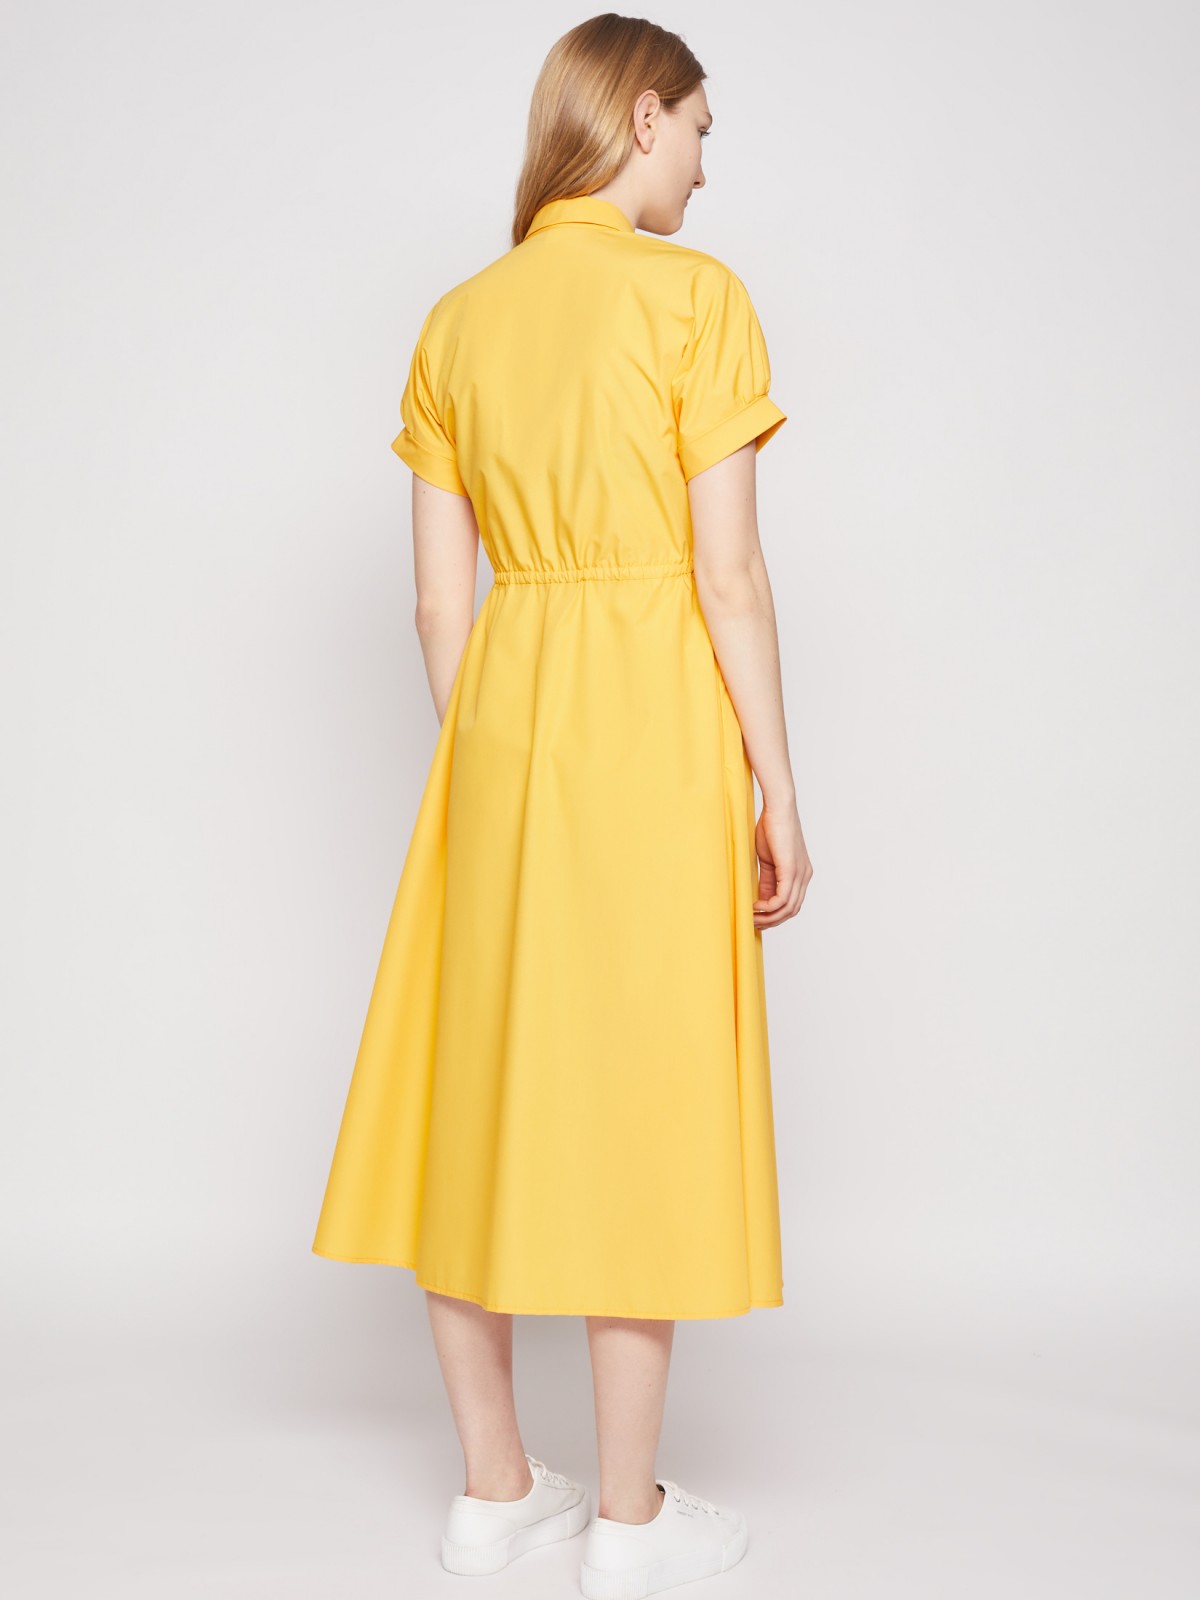 Платье zolla 022218259163, цвет желтый, размер XS - фото 6